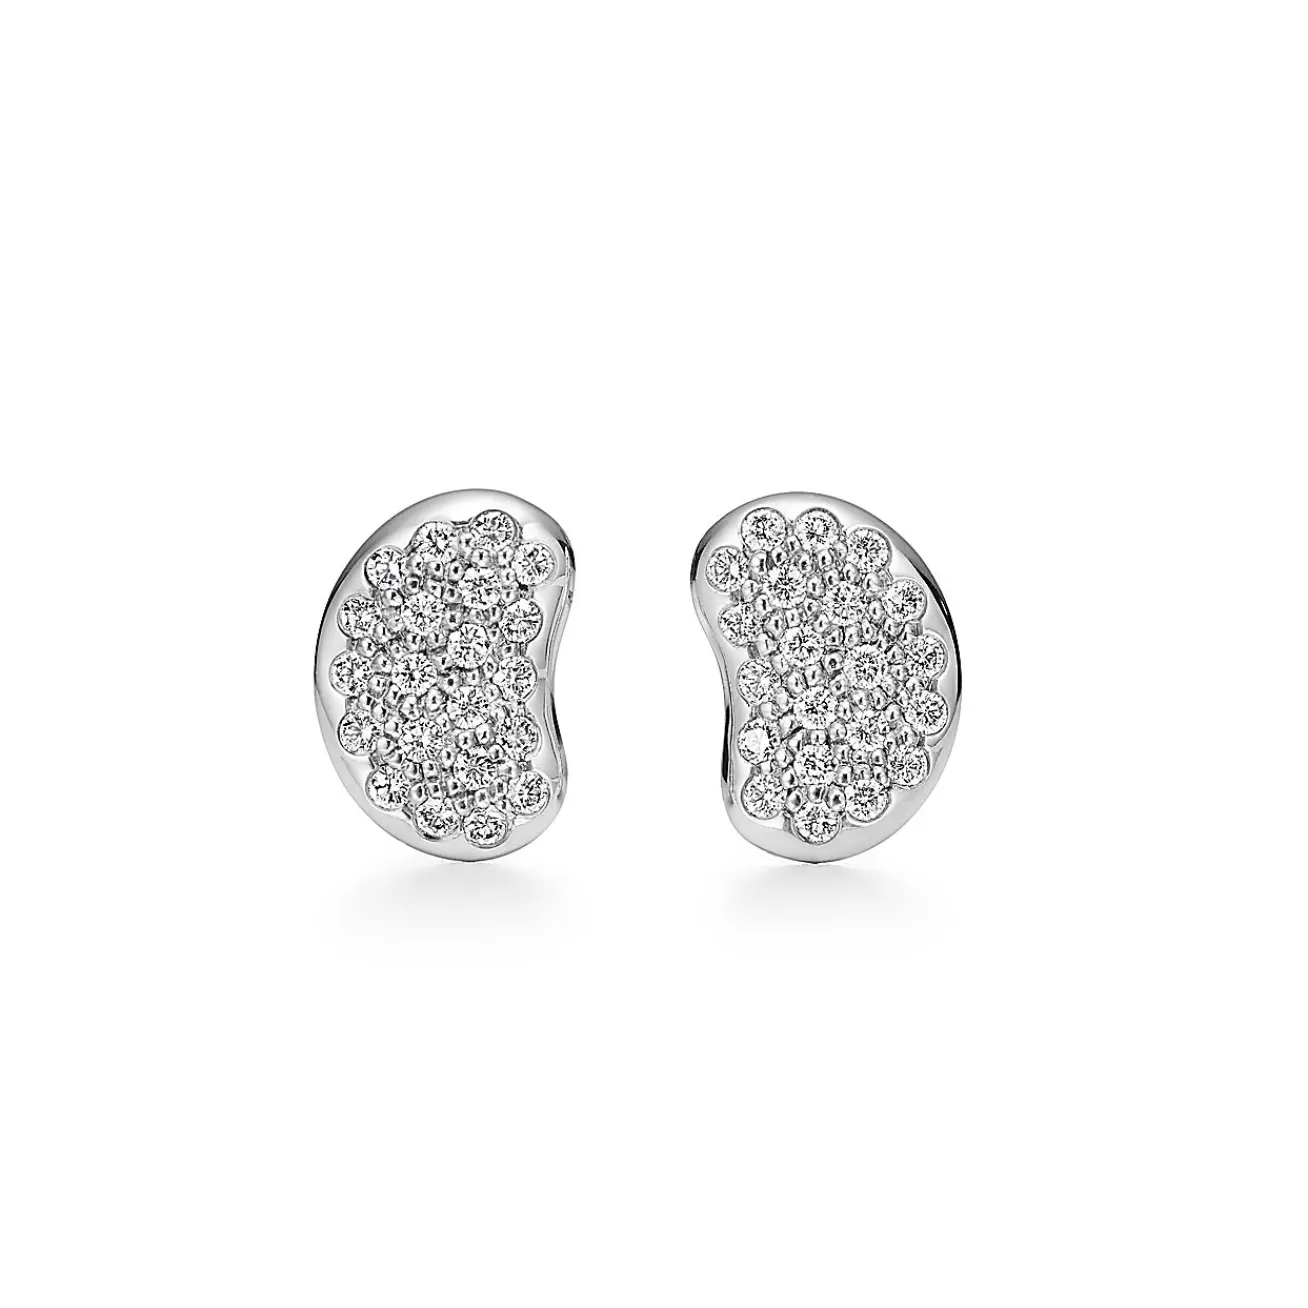 Tiffany & Co. Elsa Peretti® Bean® design Earrings in Platinum with Diamonds, 9 mm | ^ Earrings | Platinum Jewelry